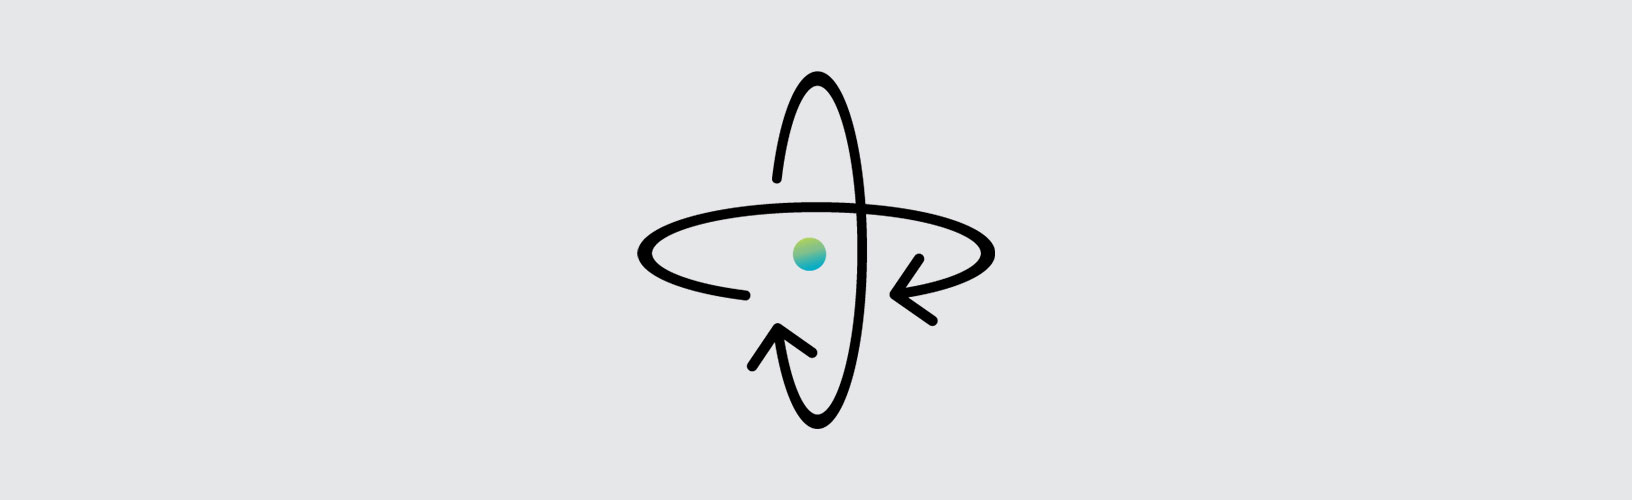 Ícone da marca Hexagon representando um indicador de atitude